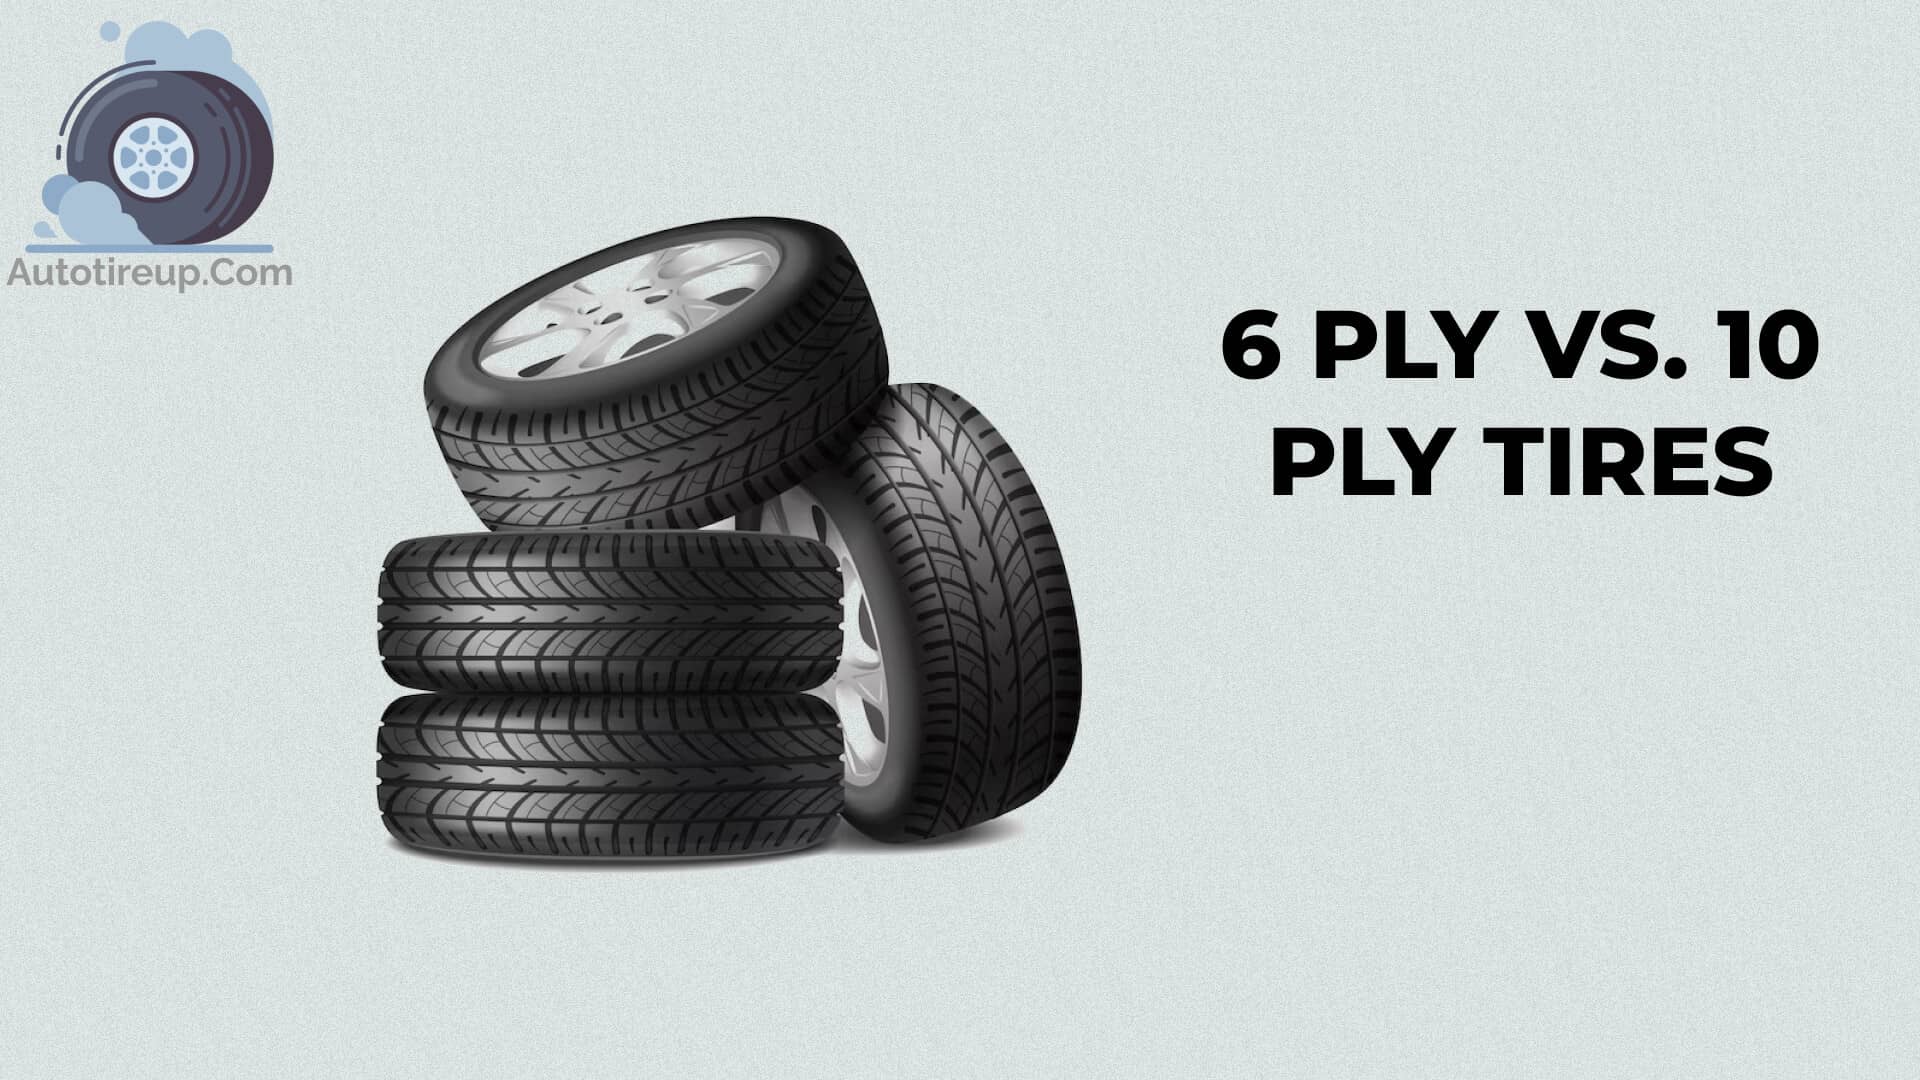 6 Ply vs. 10 Ply Tires